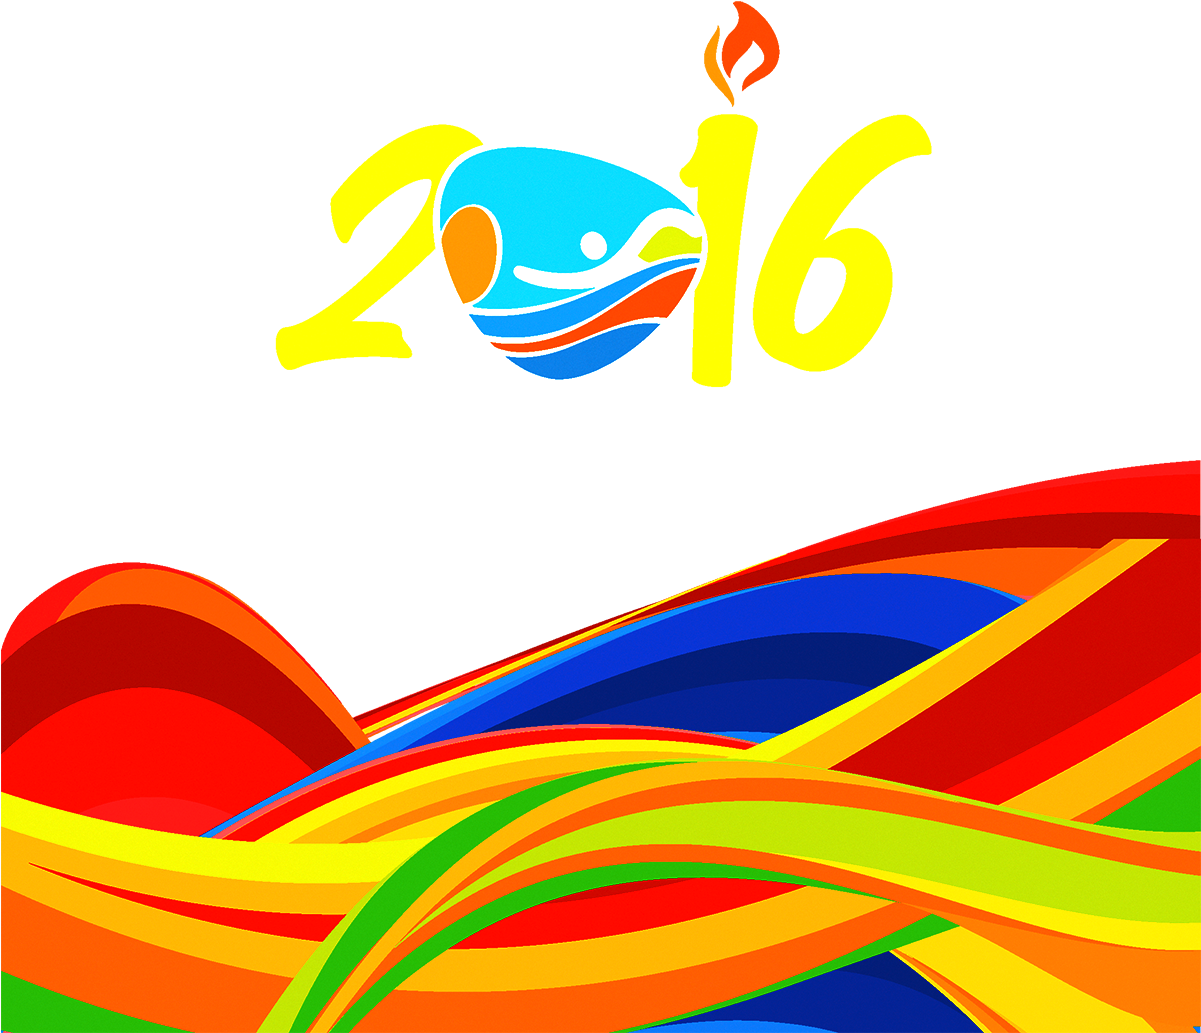 2016 Summer Olympics Opening Ceremony 2020 Summer Olympics - 2016 Summer Olympics Opening Ceremony 2020 Summer Olympics (1200x1200)